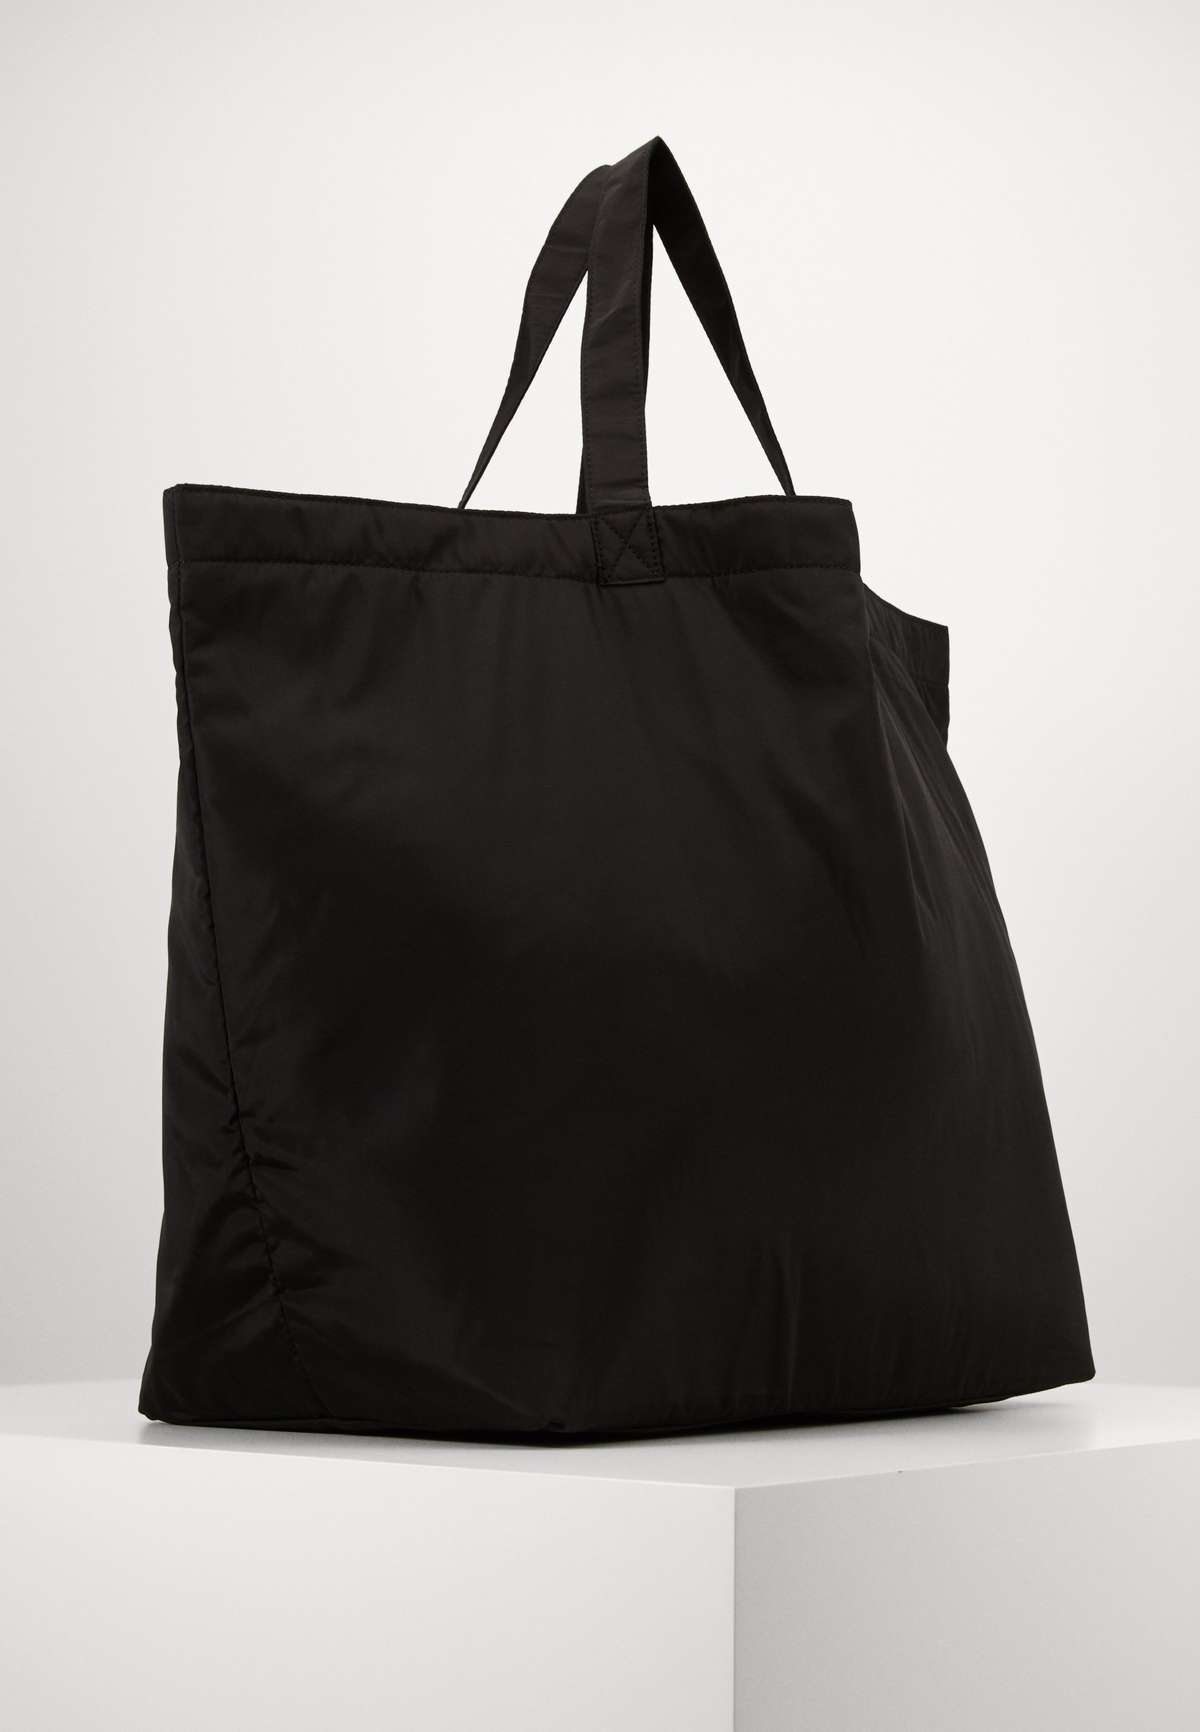 TRAVEL TOTE BAG - Shopping Bag TRAVEL TOTE BAG